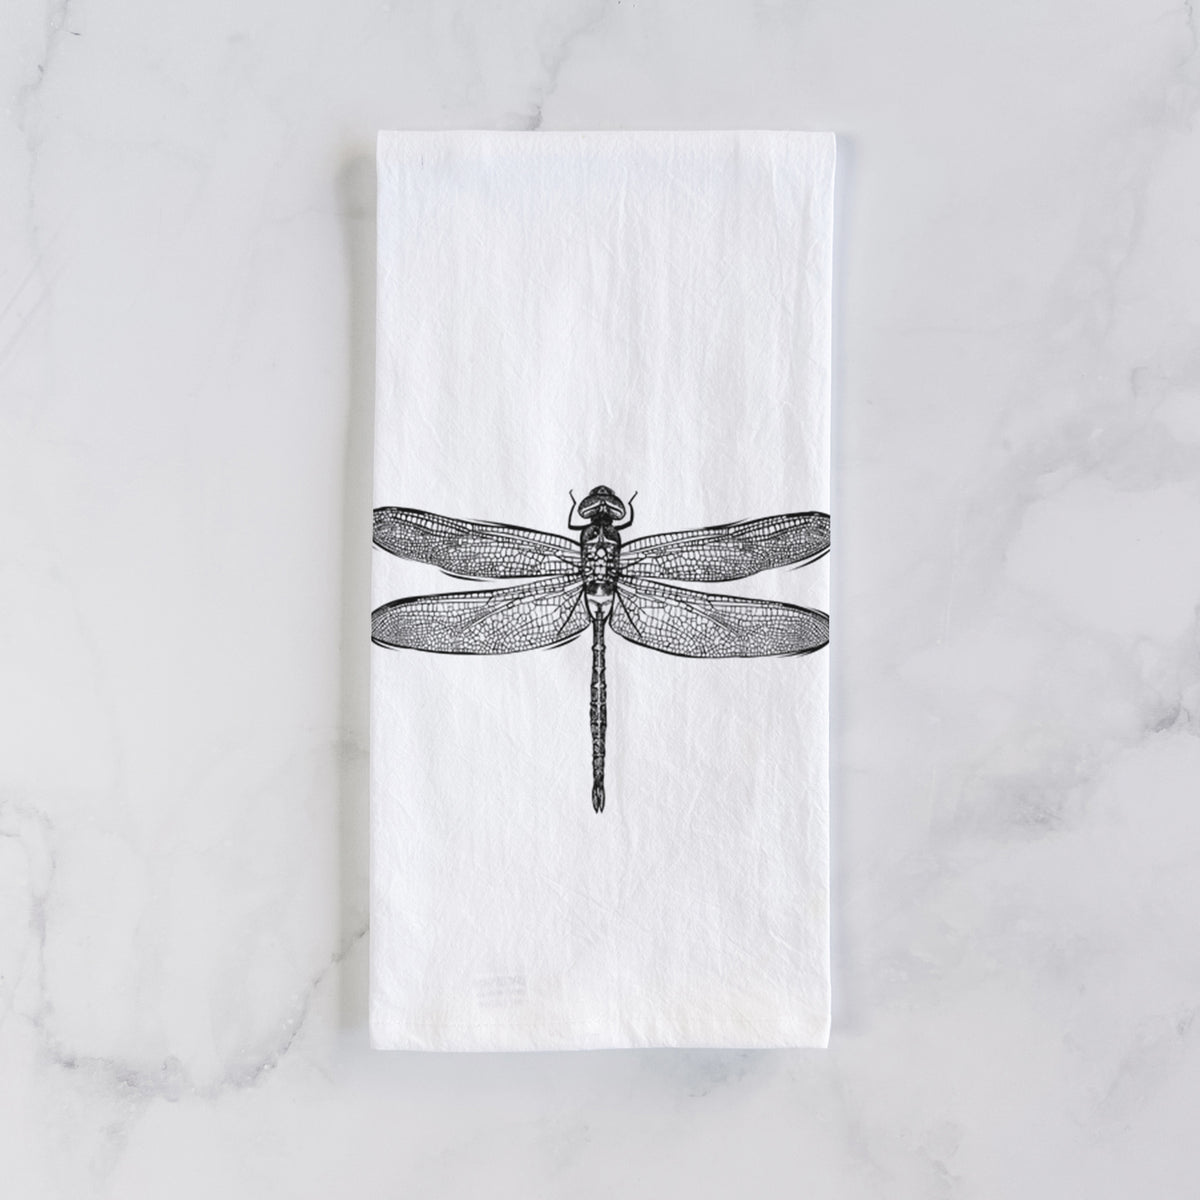 Anax Junius - Green Darner Dragonfly Tea Towel